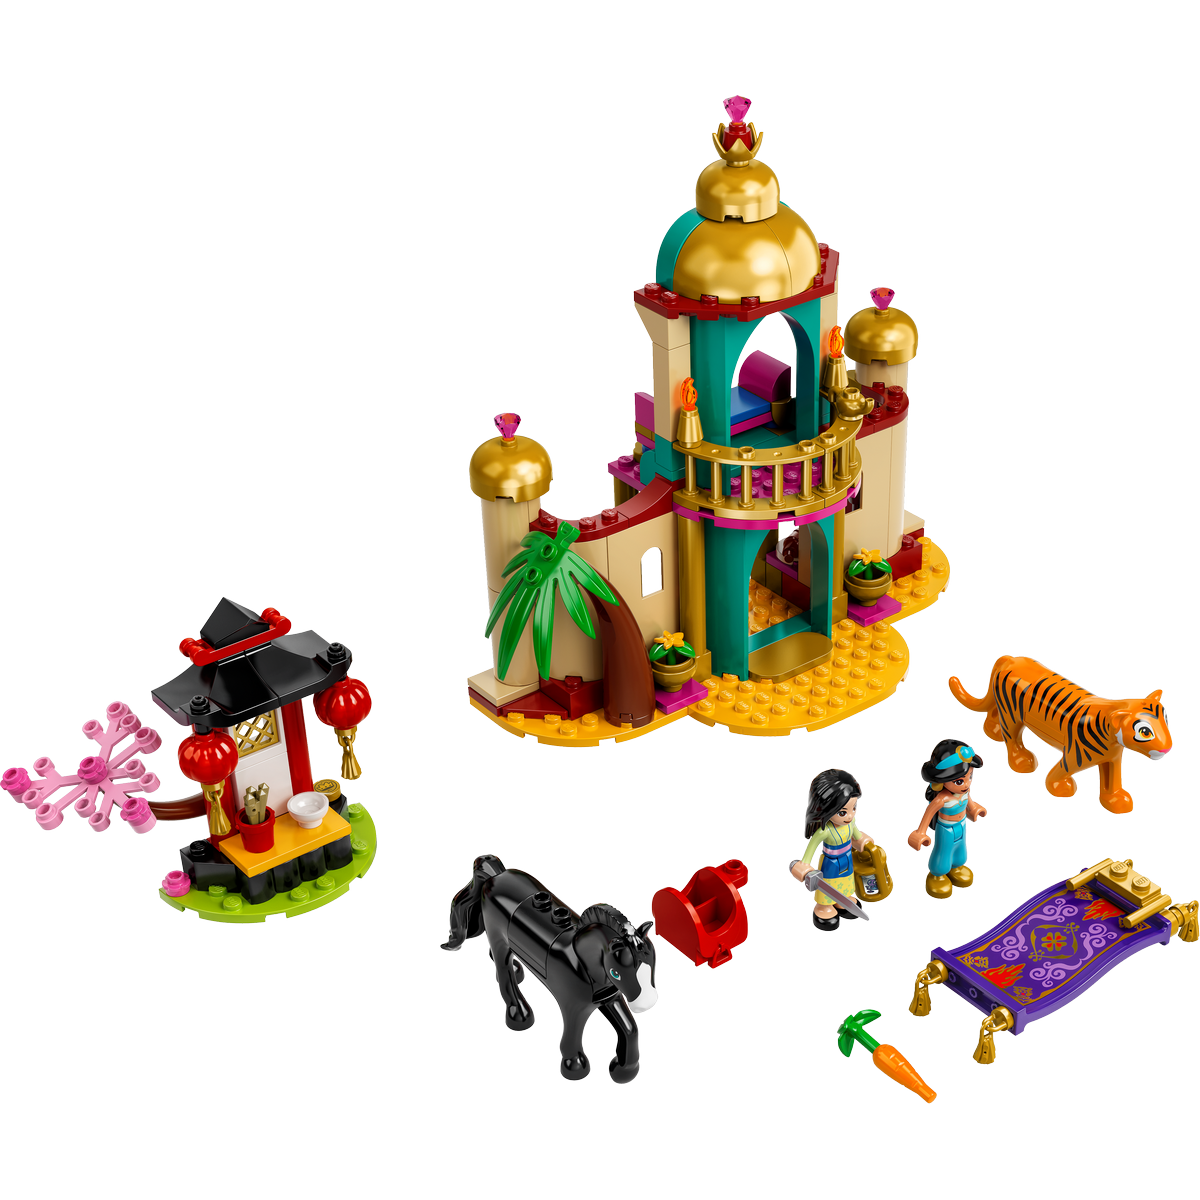 L’aventure de Jasmine et Mulan LEGO Disney Princesses 43208